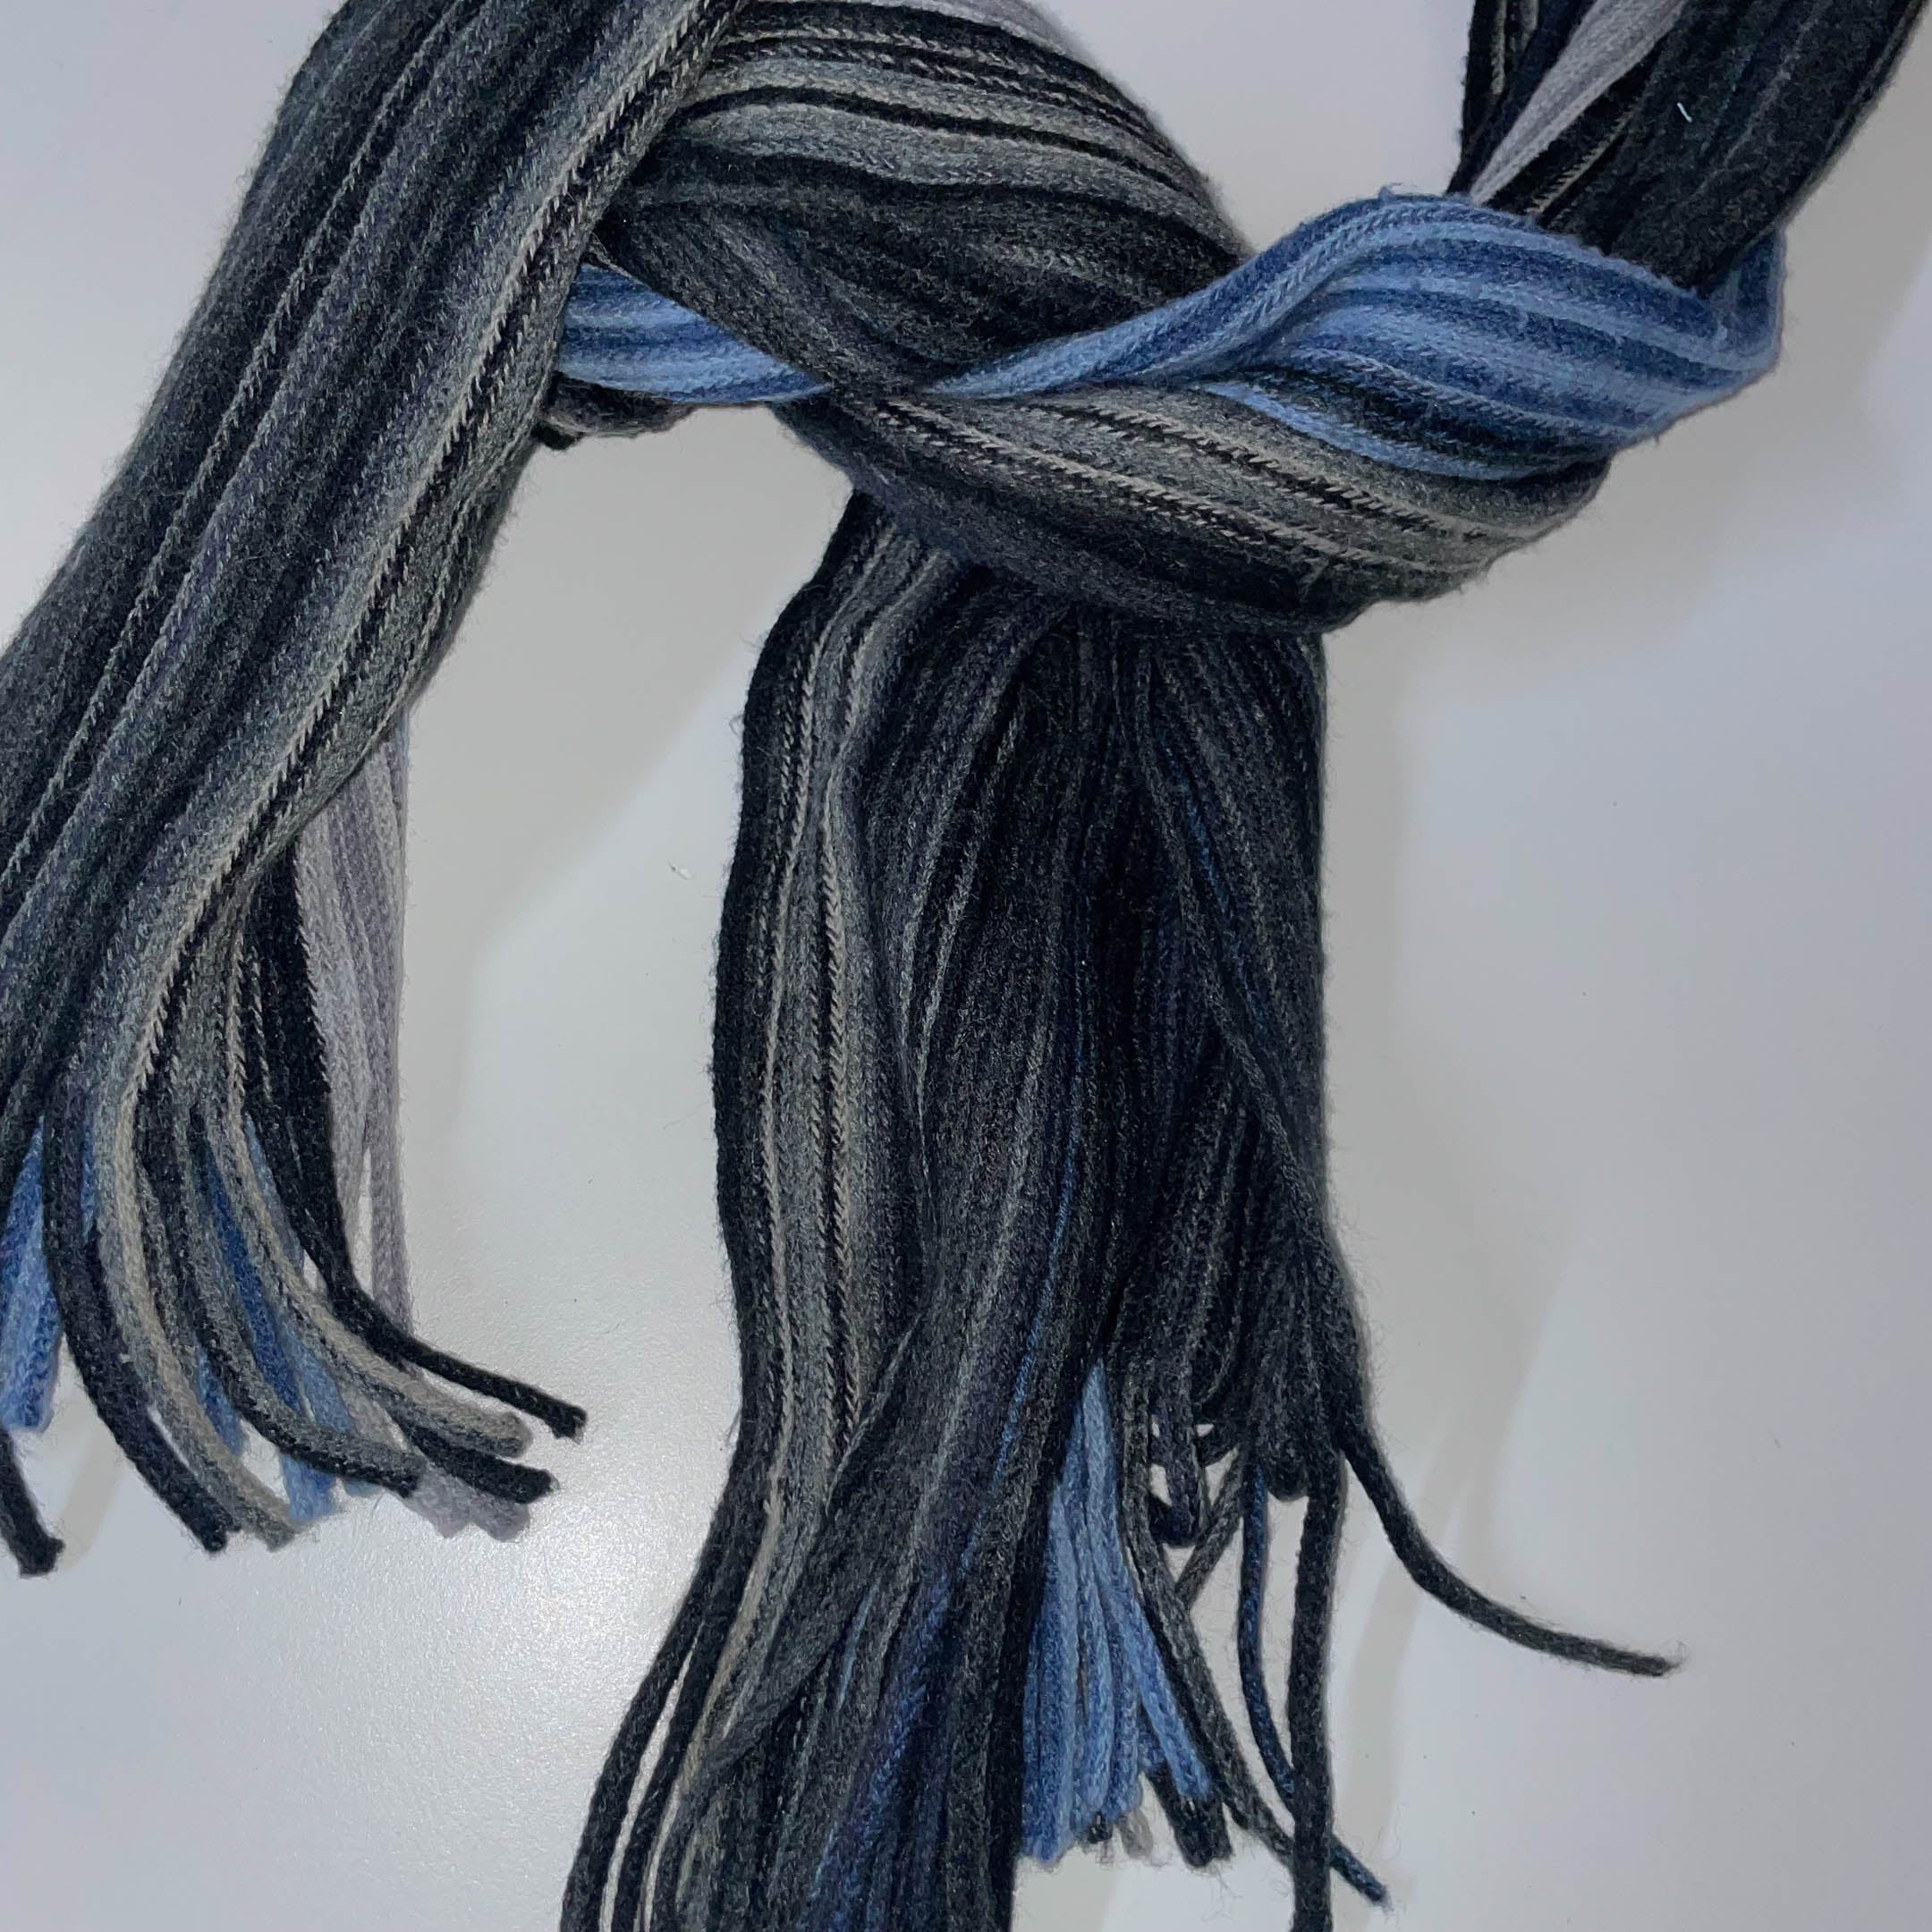 Vintage Michealis multicolor wool winter scarf| L 35 W 12 |BLUE&GREY|SKU 3703